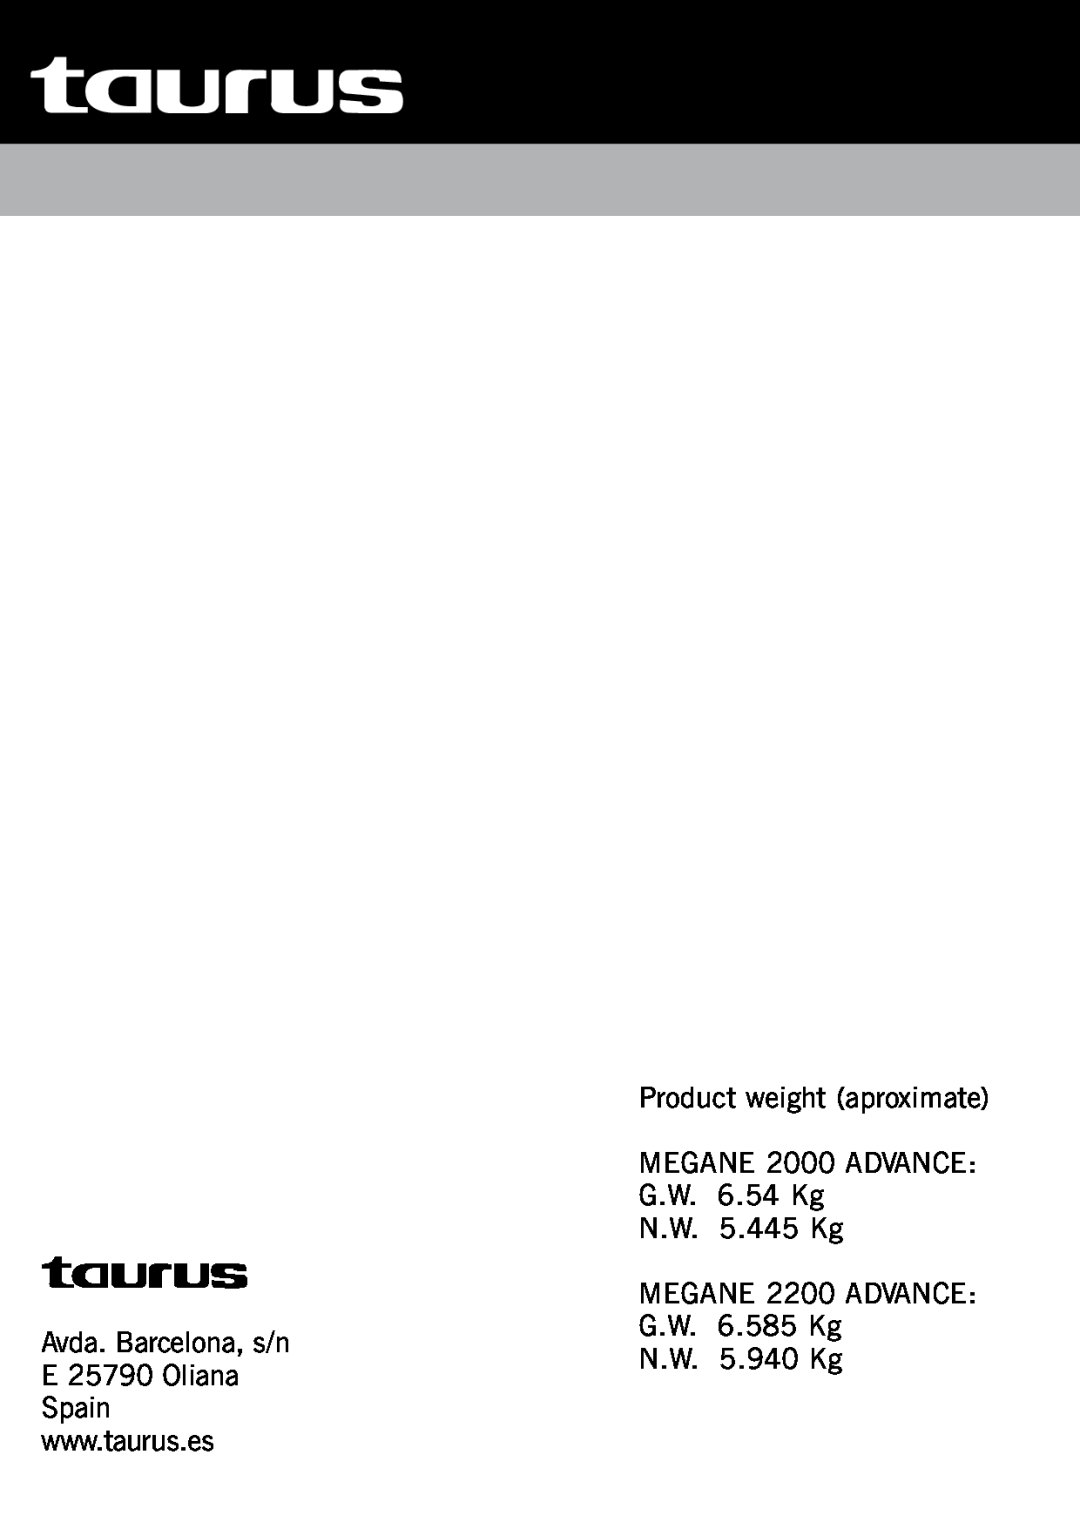 Taurus Group manual Product weight aproximate MEGANE 2000 ADVANCE, G.W. 6.54 Kg N.W. 5.445 Kg MEGANE 2200 ADVANCE 